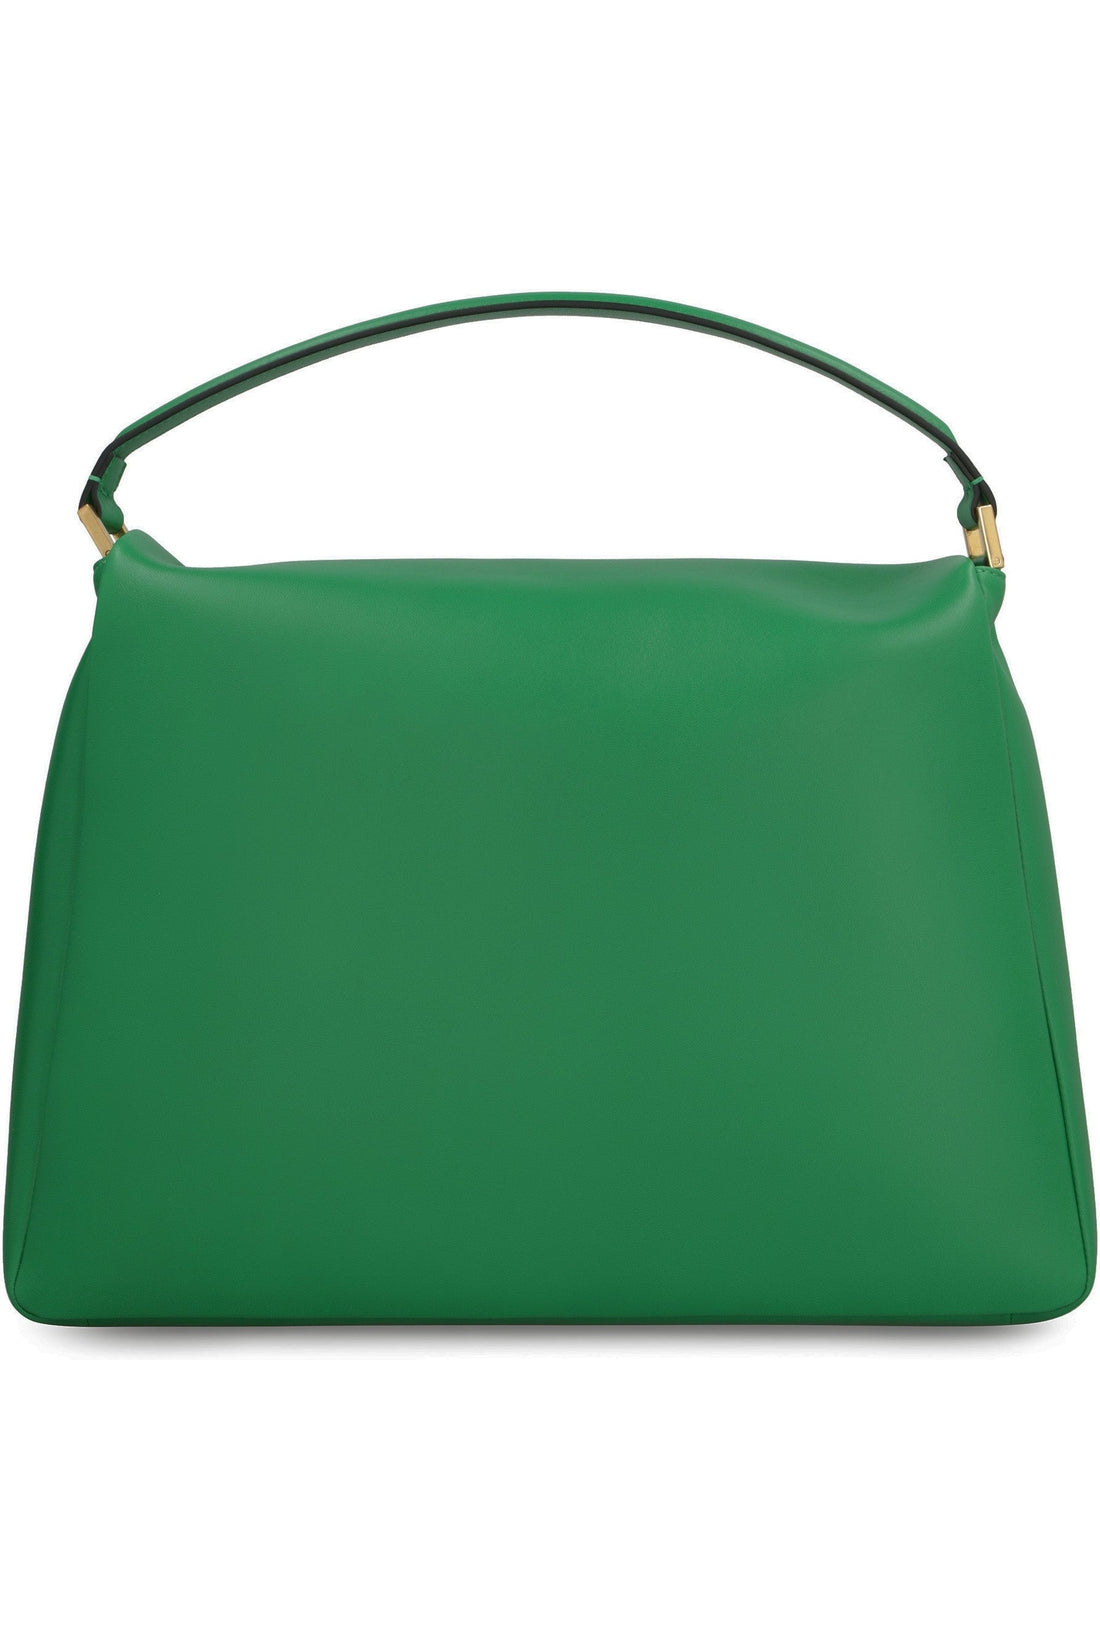 Valentino-OUTLET-SALE-Valentino Garavani - One Stud leather handbag-ARCHIVIST